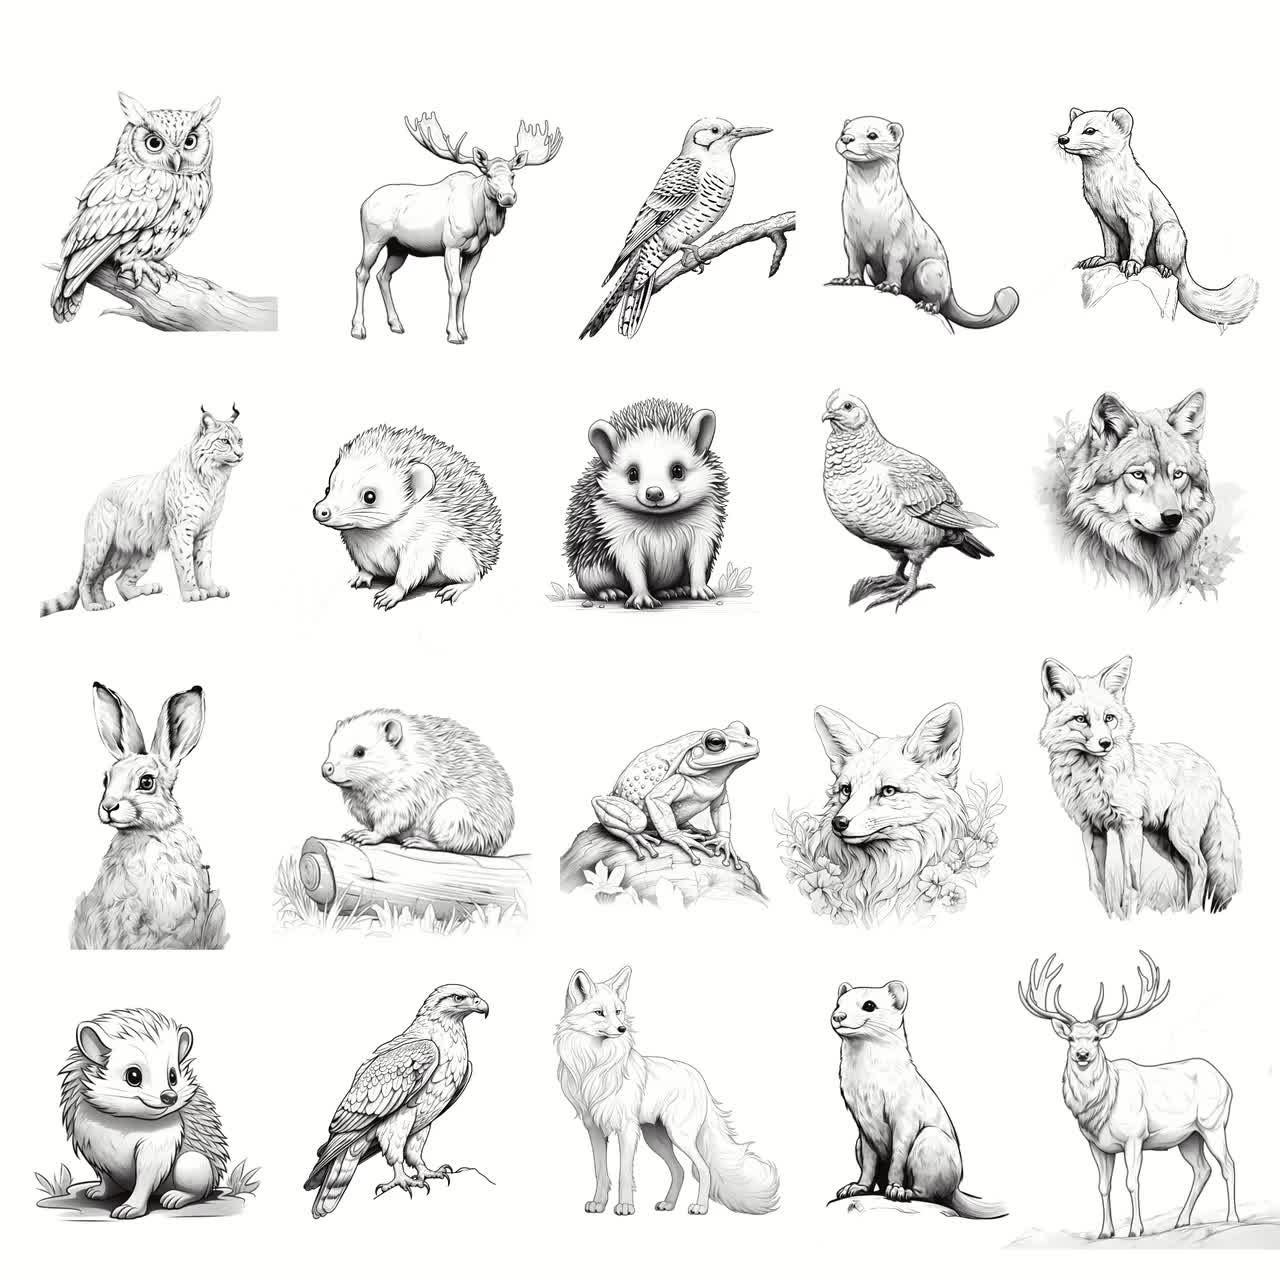 Woodland animal stamps